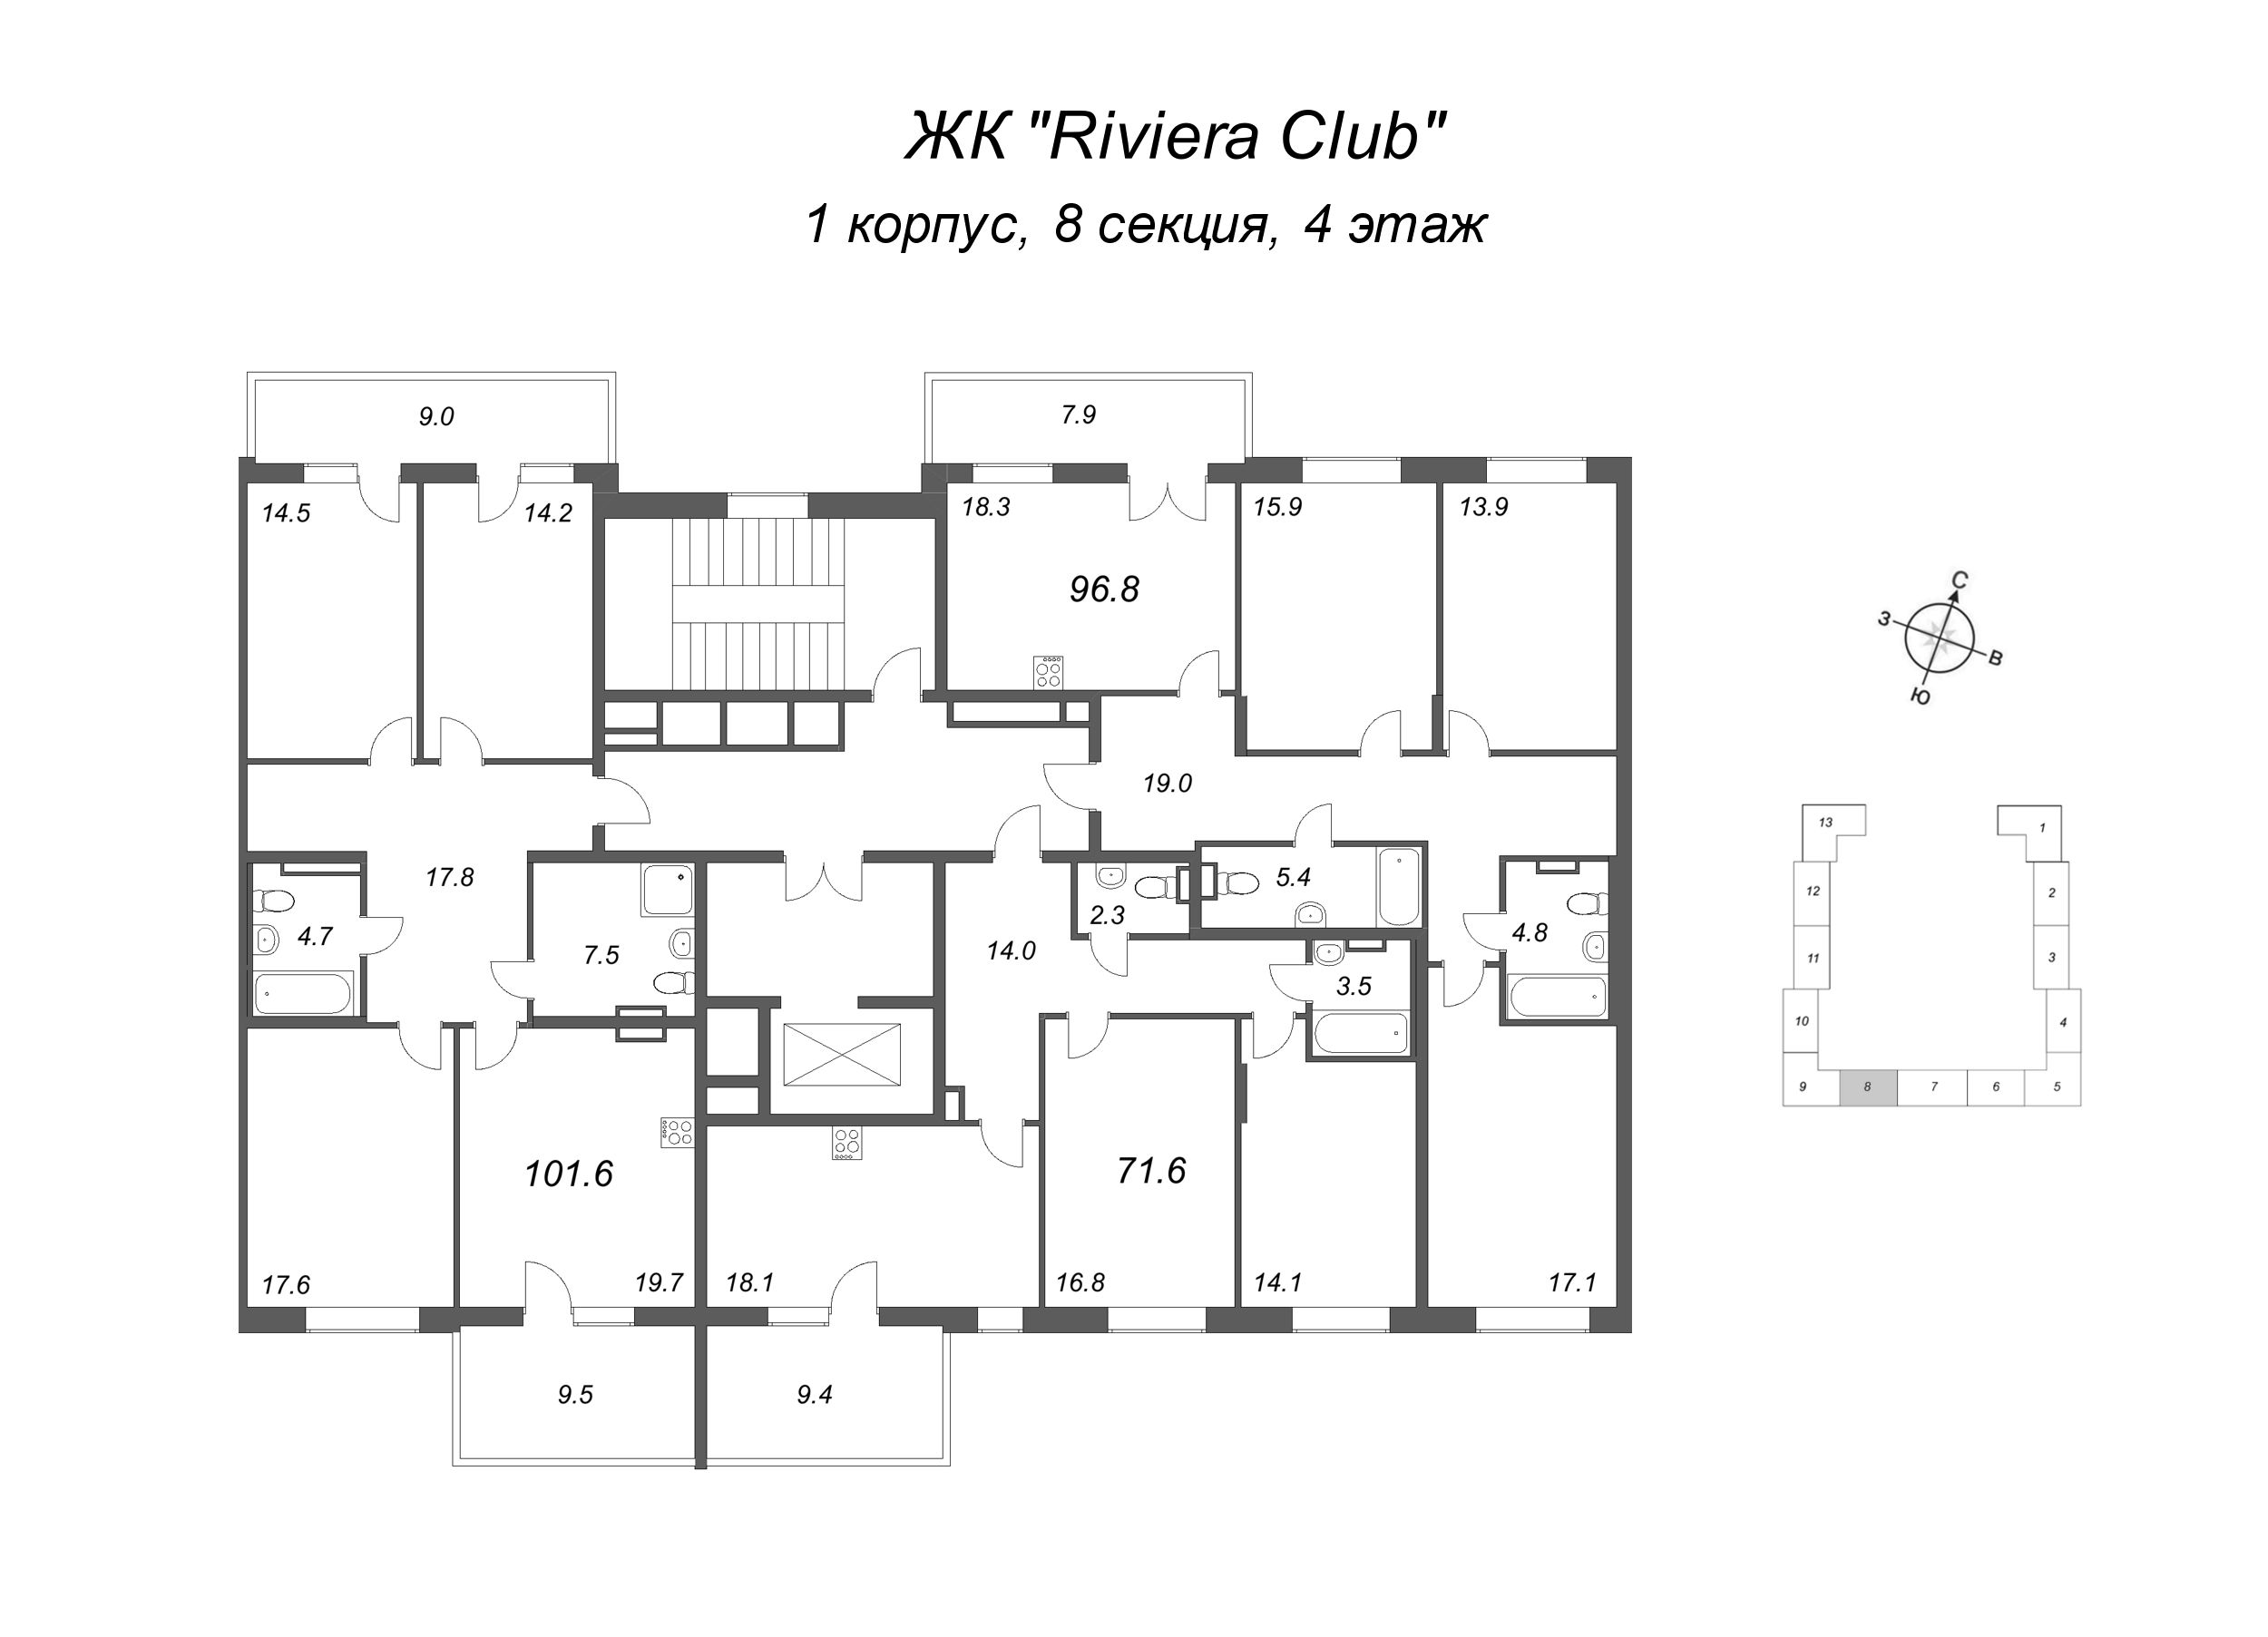 3-комнатная (Евро) квартира, 71.6 м² в ЖК "Riviera Club" - планировка этажа